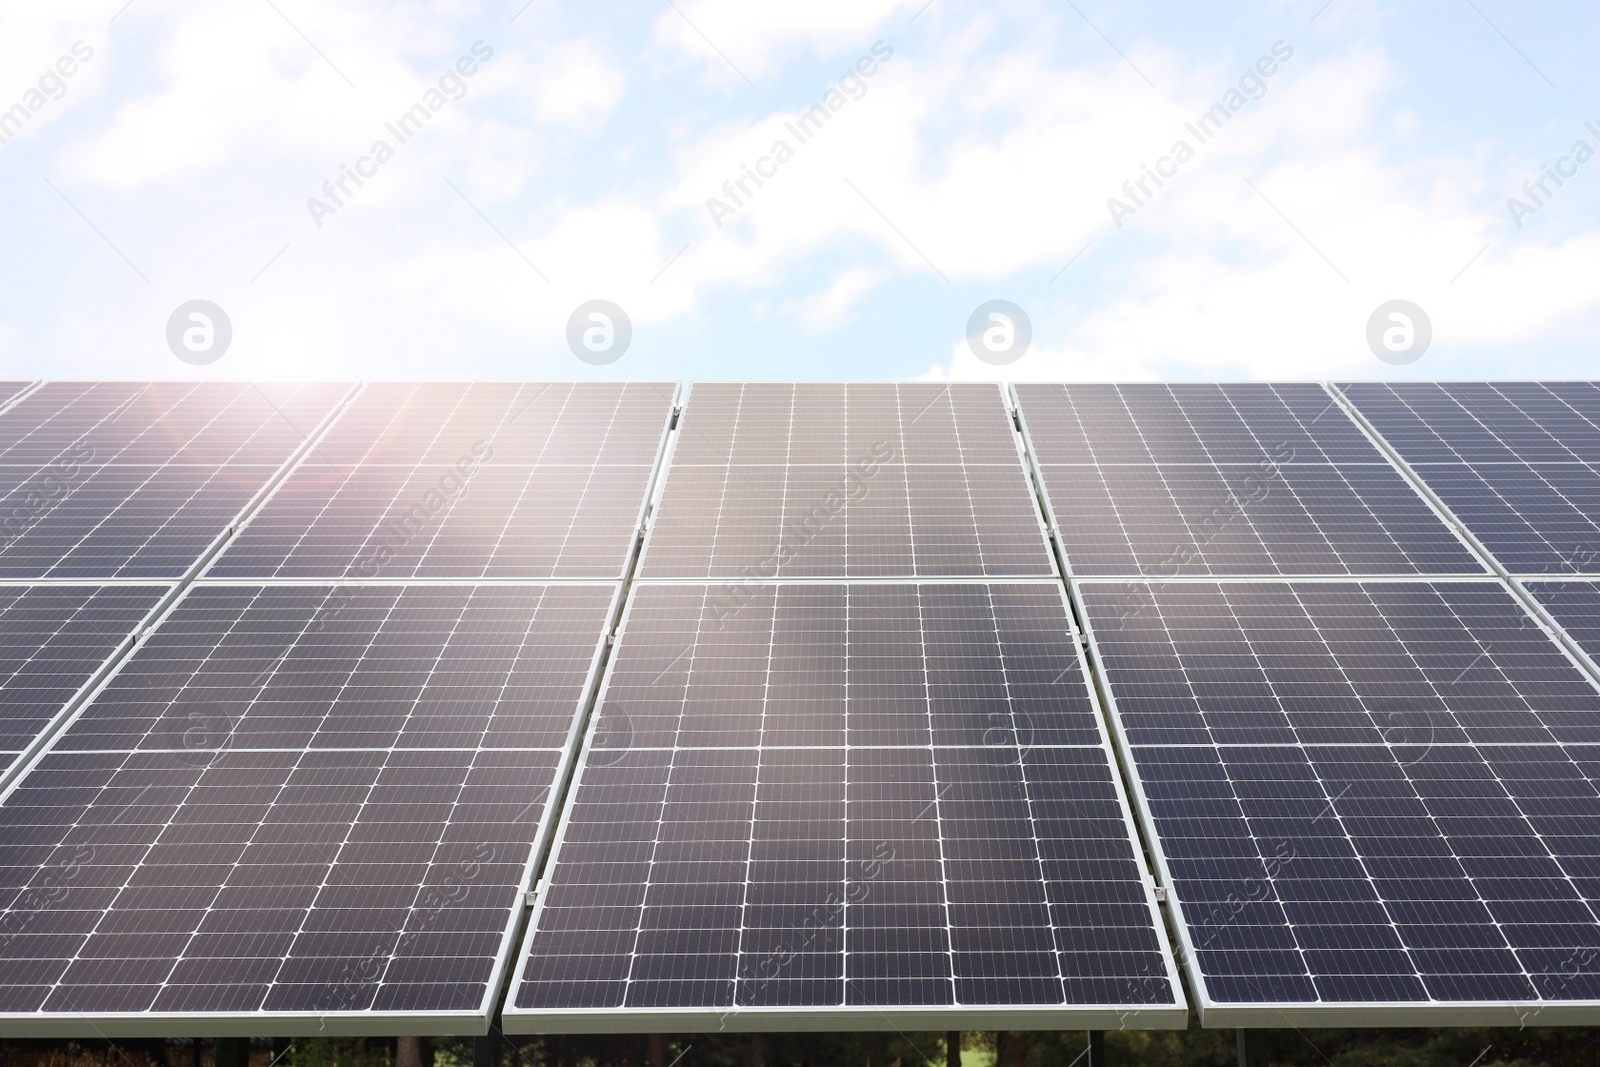 Photo of Solar panels outdoors on sunny day. Alternative energy